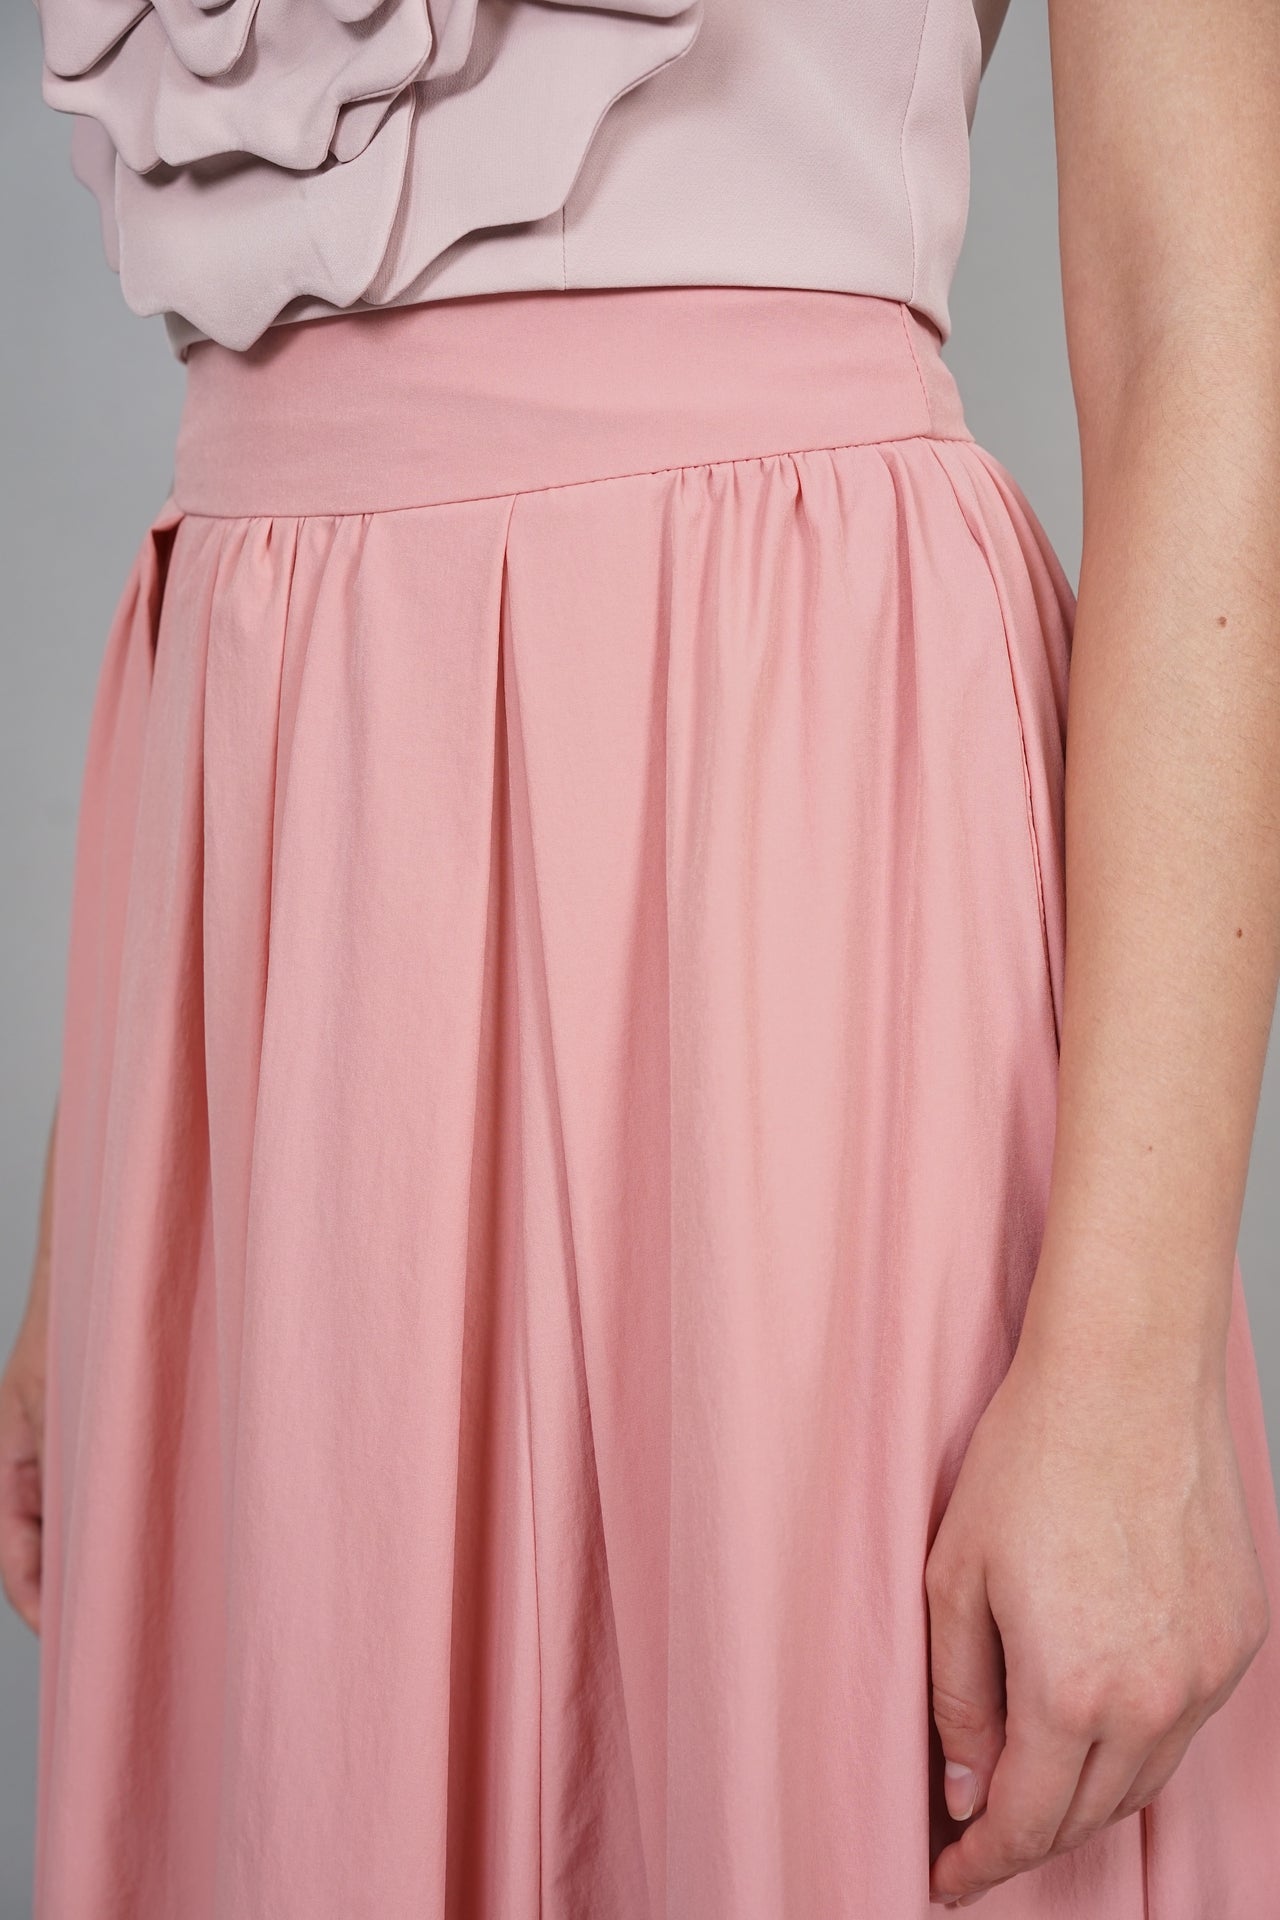 EVERYDAY / Sarai High-Waist Skirt in Pink